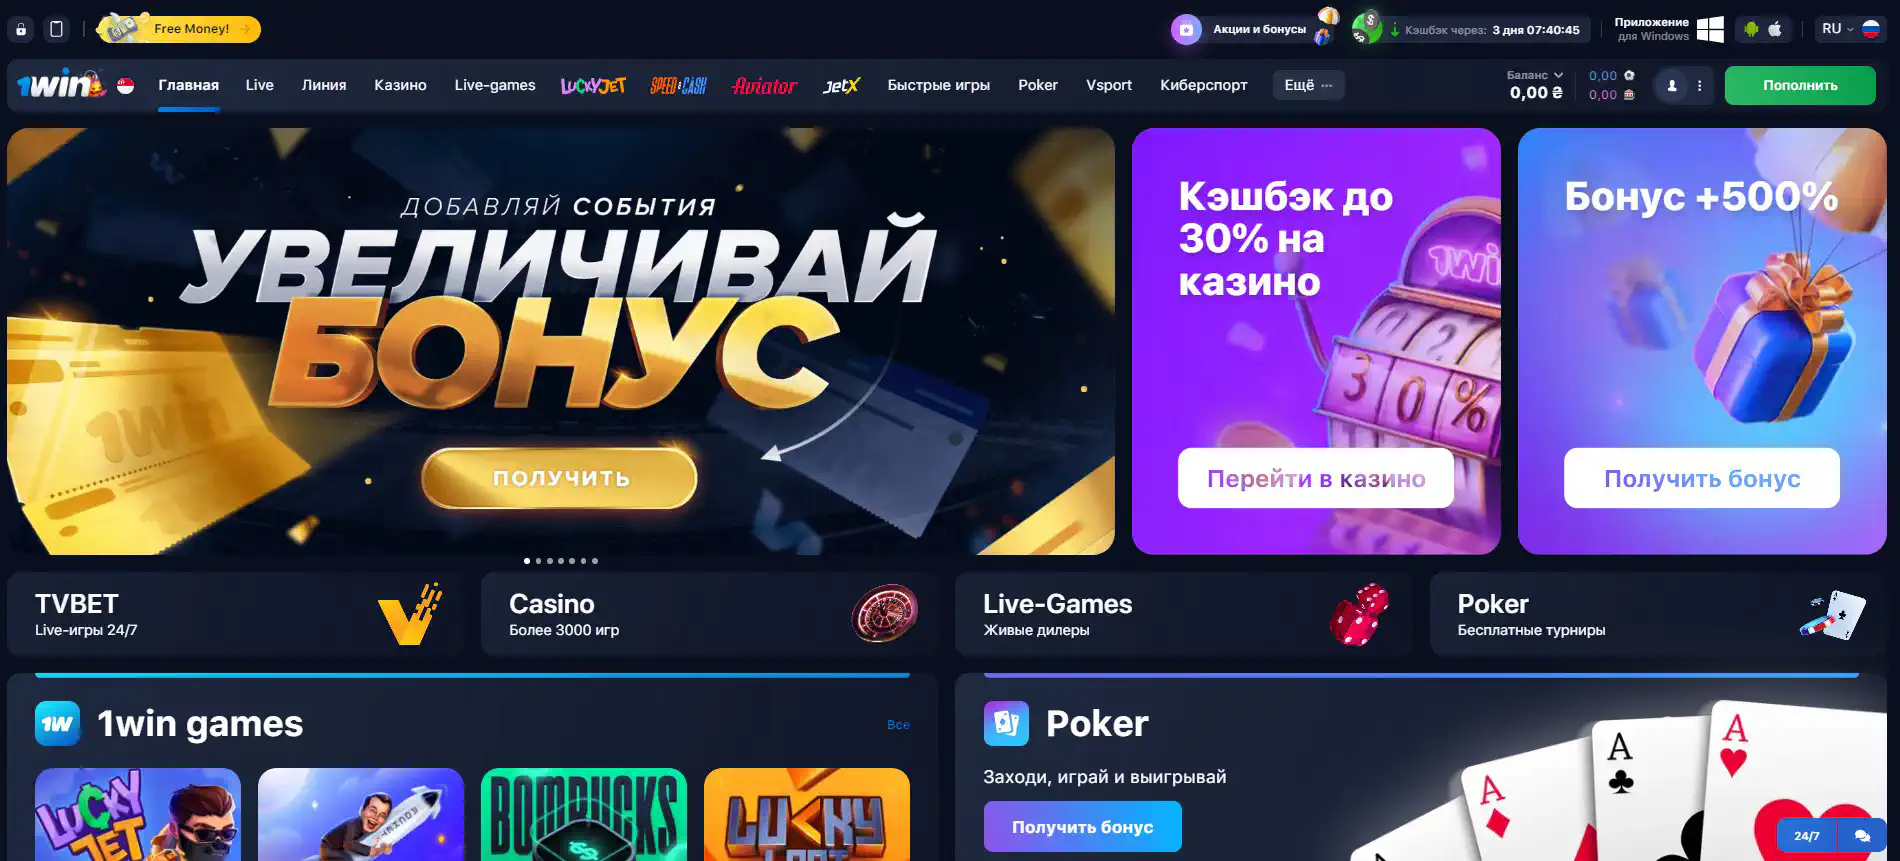 Сайт онлайн-казино 1win